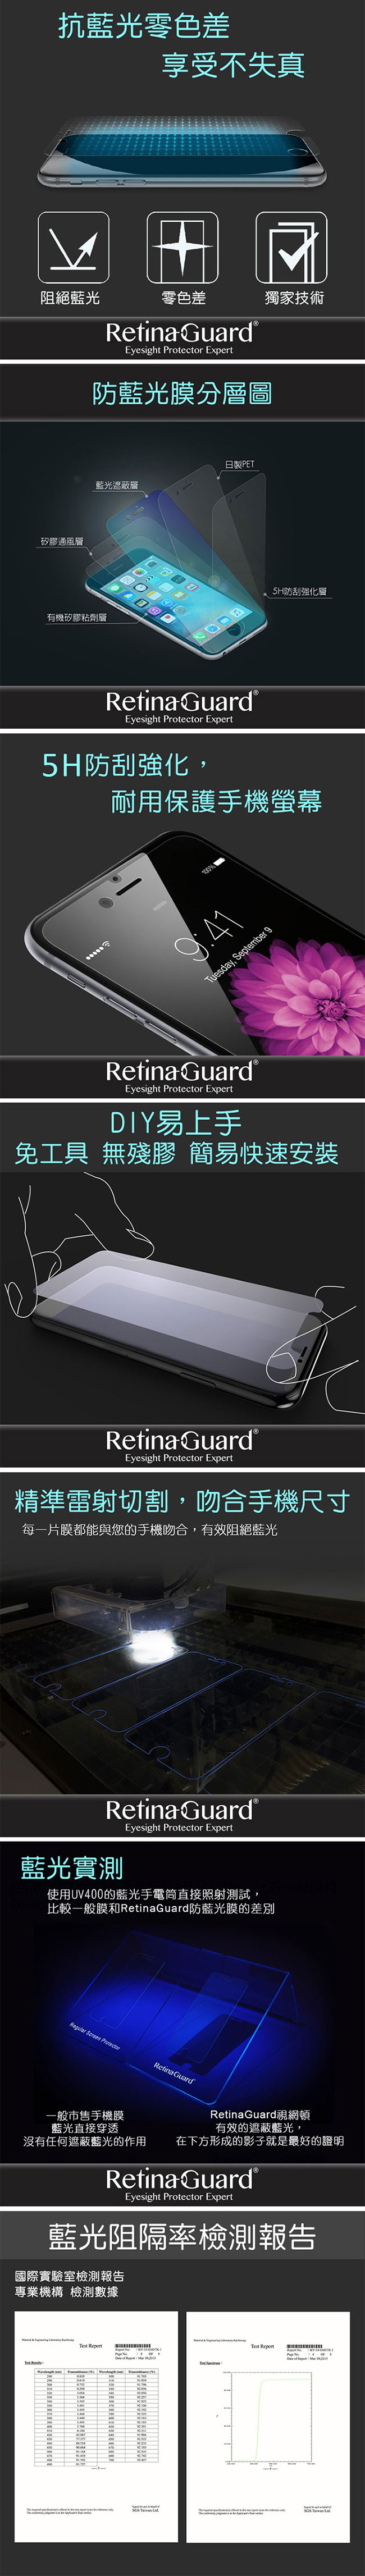 RetinaGuard 視網盾 IPAD PRO 11 (2018新版) 防藍光鋼化玻璃